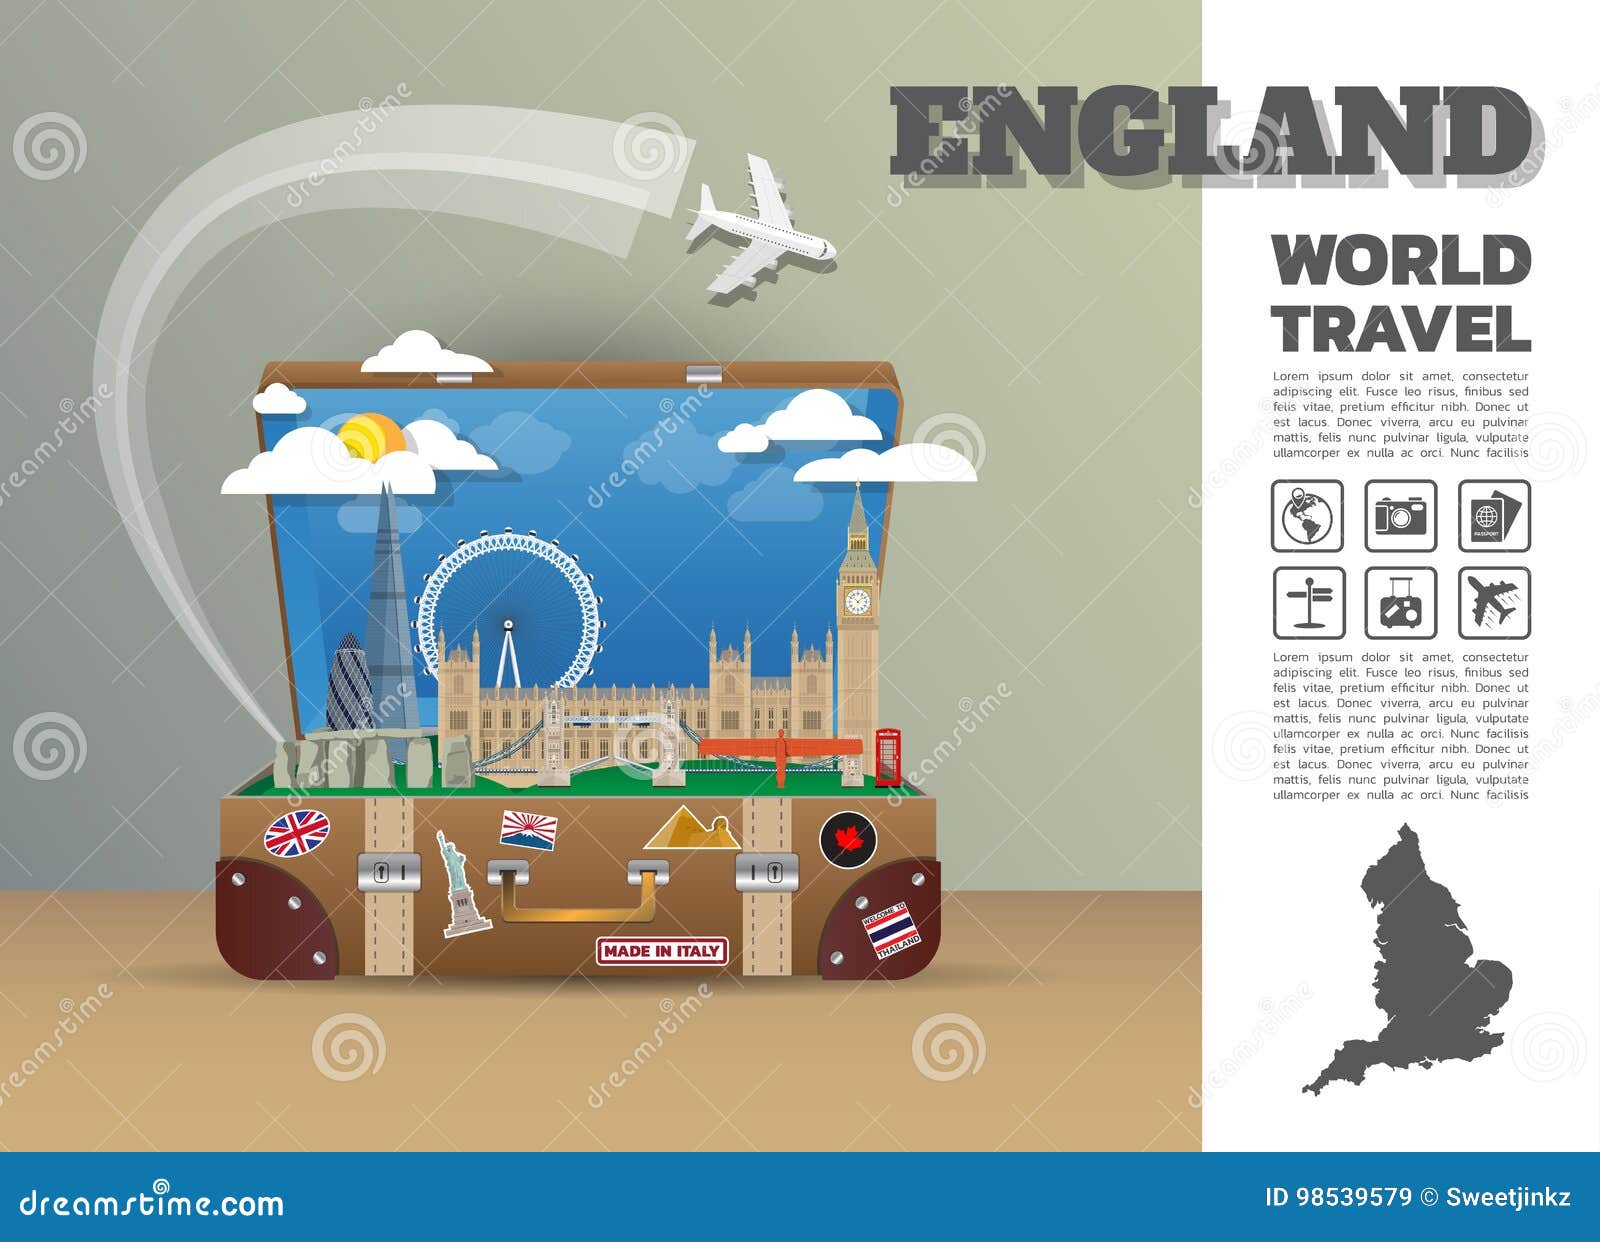 England Landmark Global Travel and Journey Infographic Luggage.3D